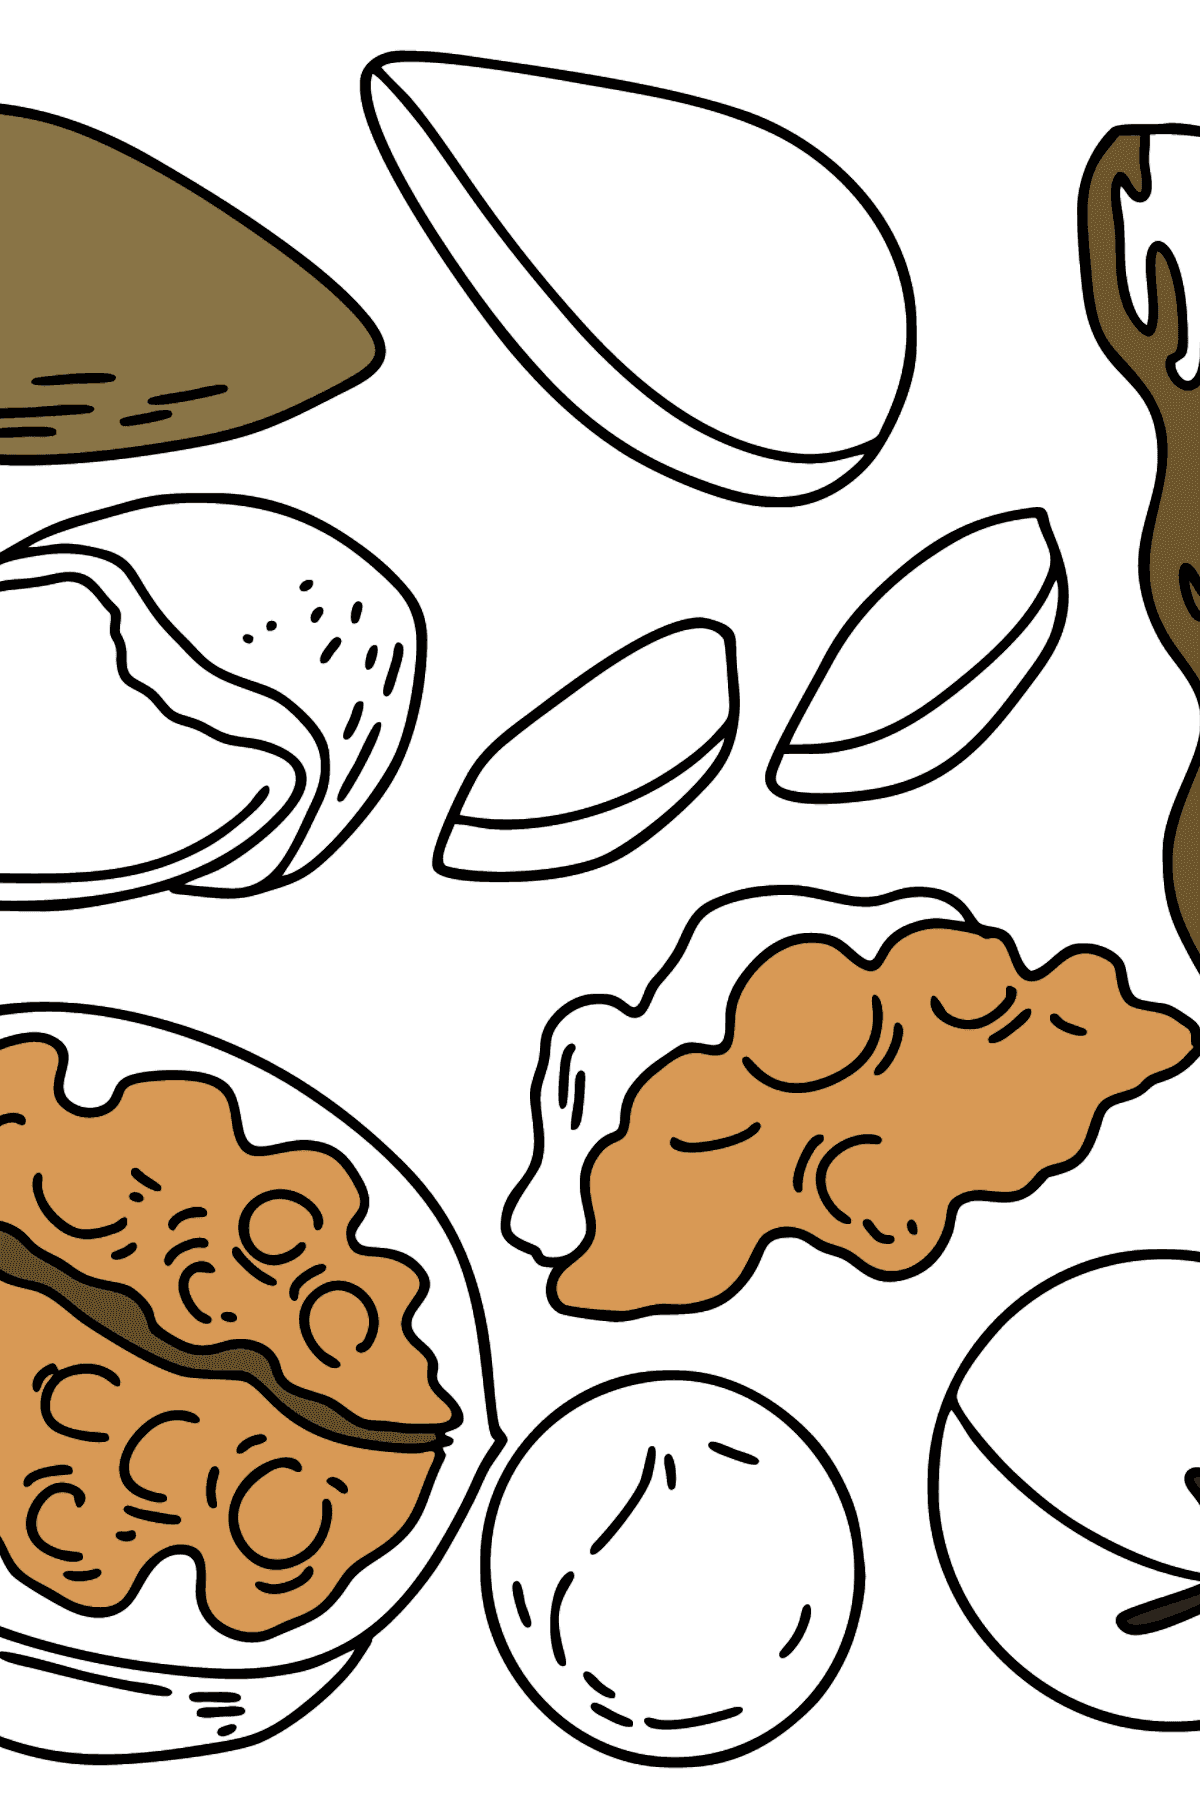 Tegning til fargelegging nøtter: valnøtter, macadamia, mandler og peanøtter - Tegninger til fargelegging for barn